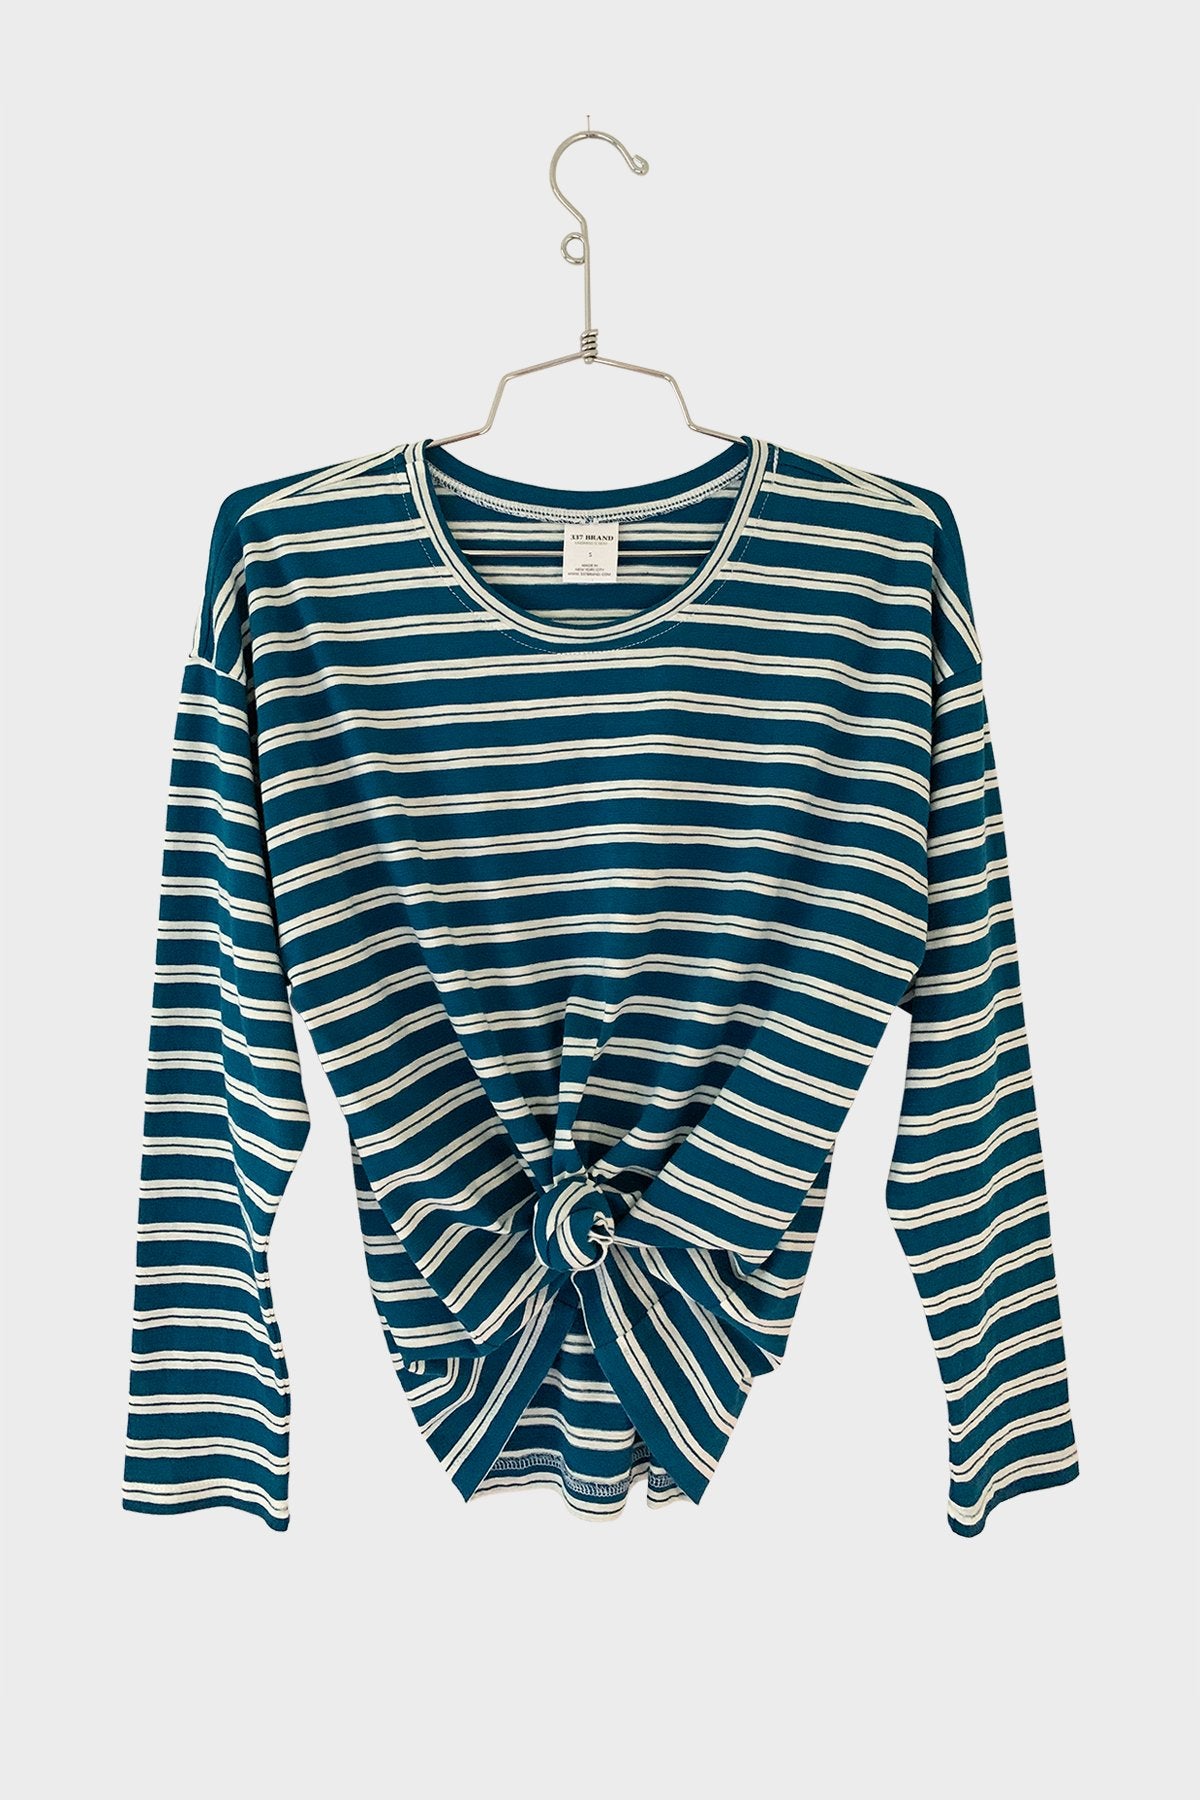 Striped Long Sleeve Tee - 337 BRAND Women's Sustainable Loungewear ?id=16641564442658